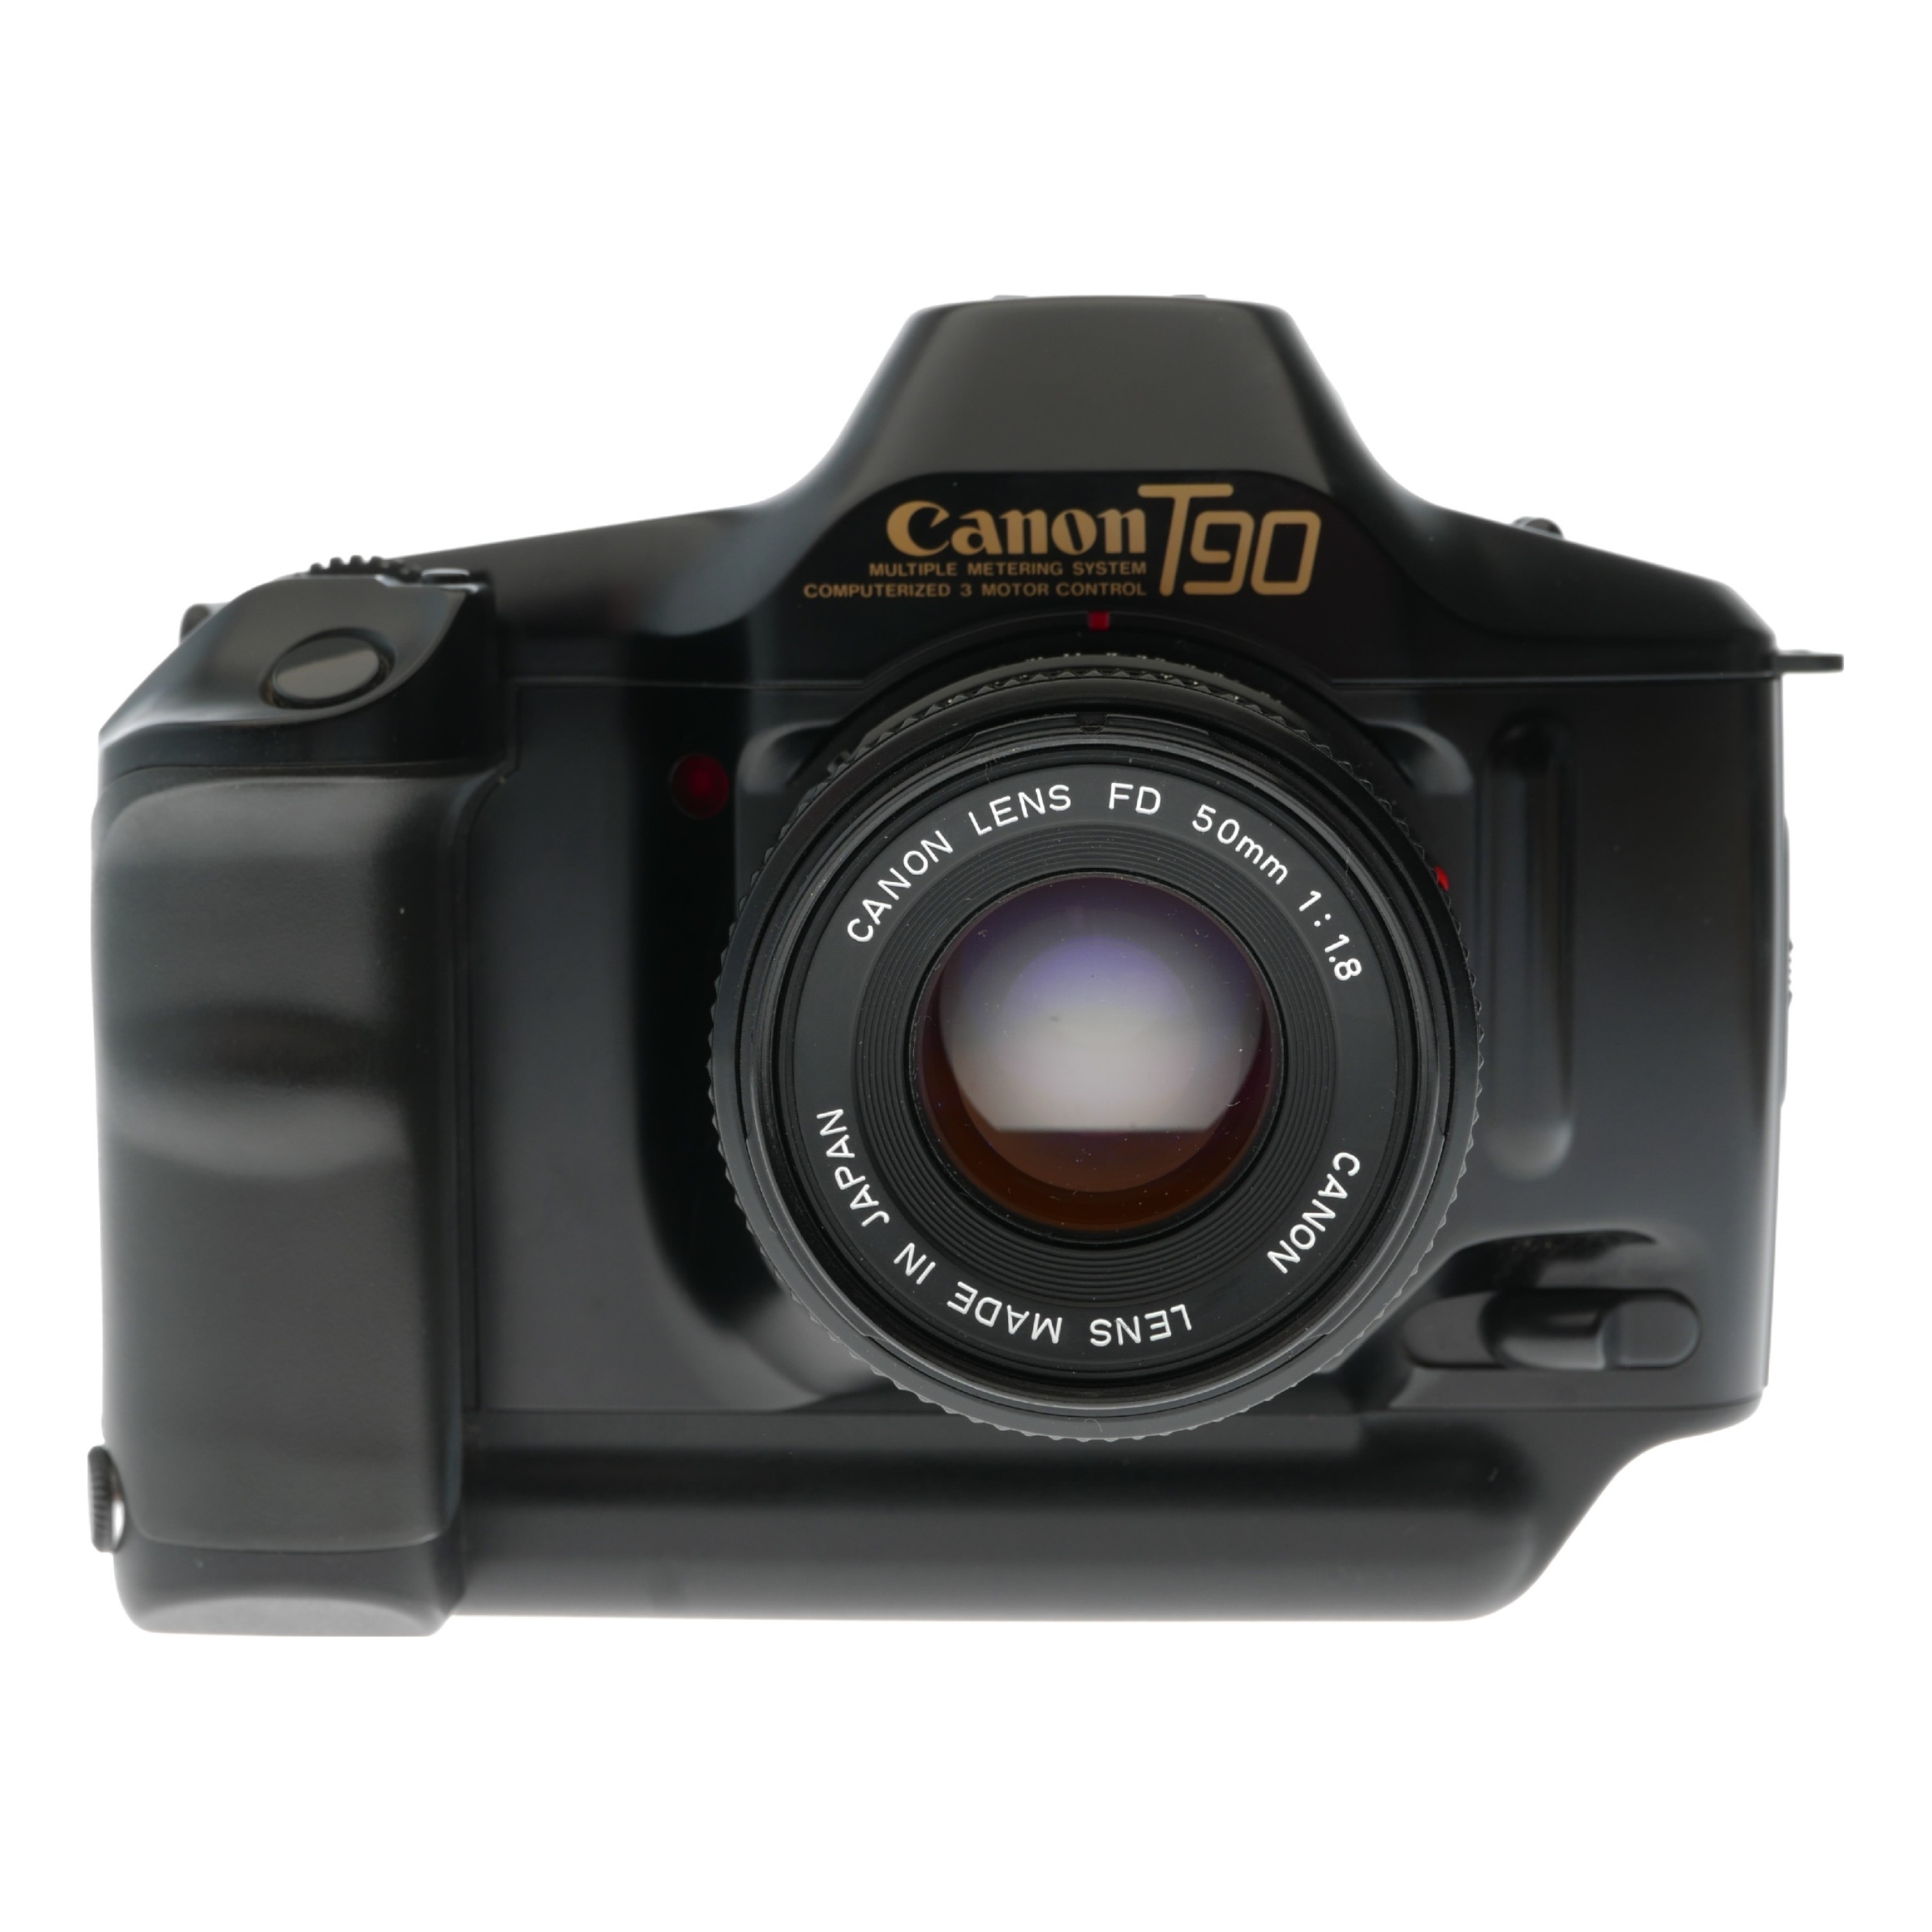 Canon T90 Black SLR camera Retro FD 50mm 1.8 lens cap and